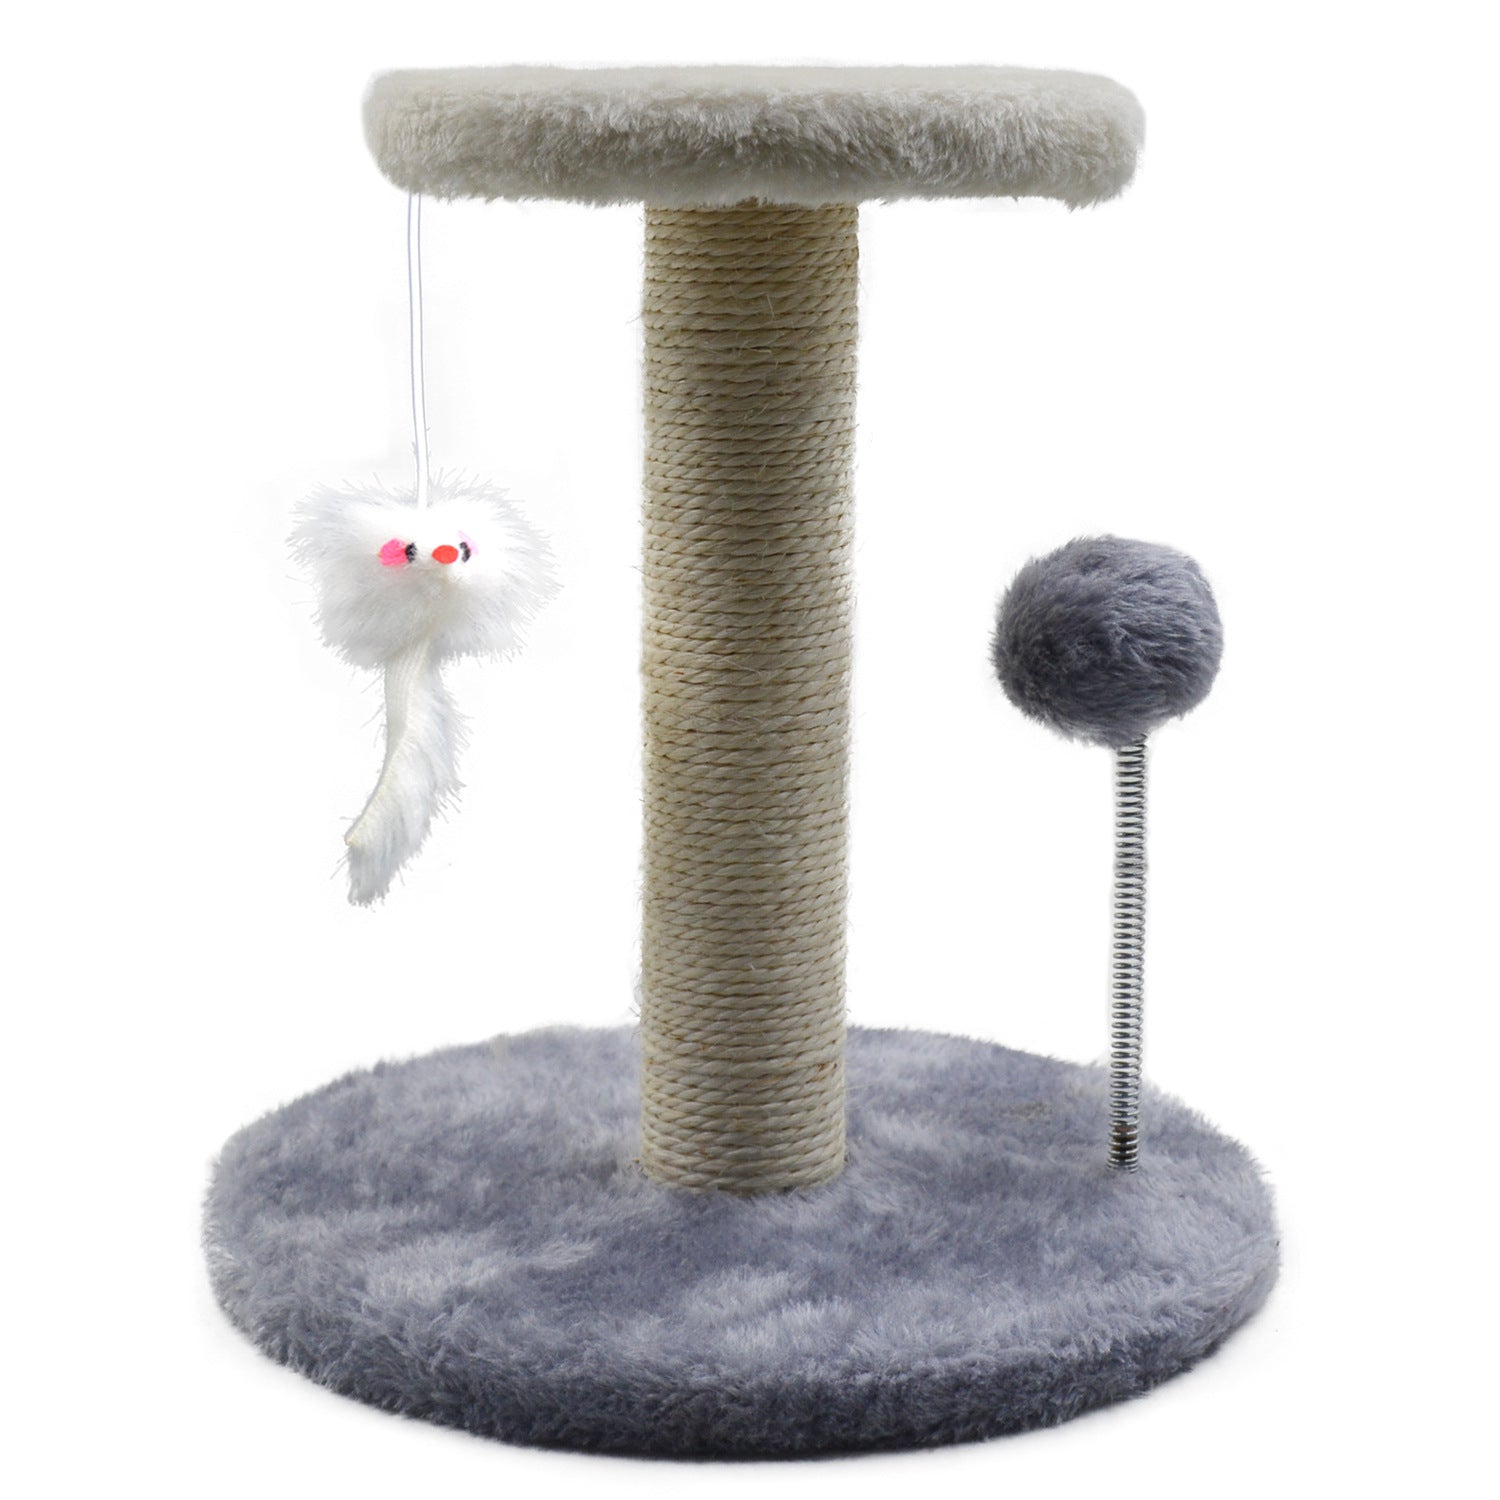 Mingwear Gray Cat Climb Frame， Pet Cat Scratchboard Jumping Platform with Hanging Rat Spring Ball